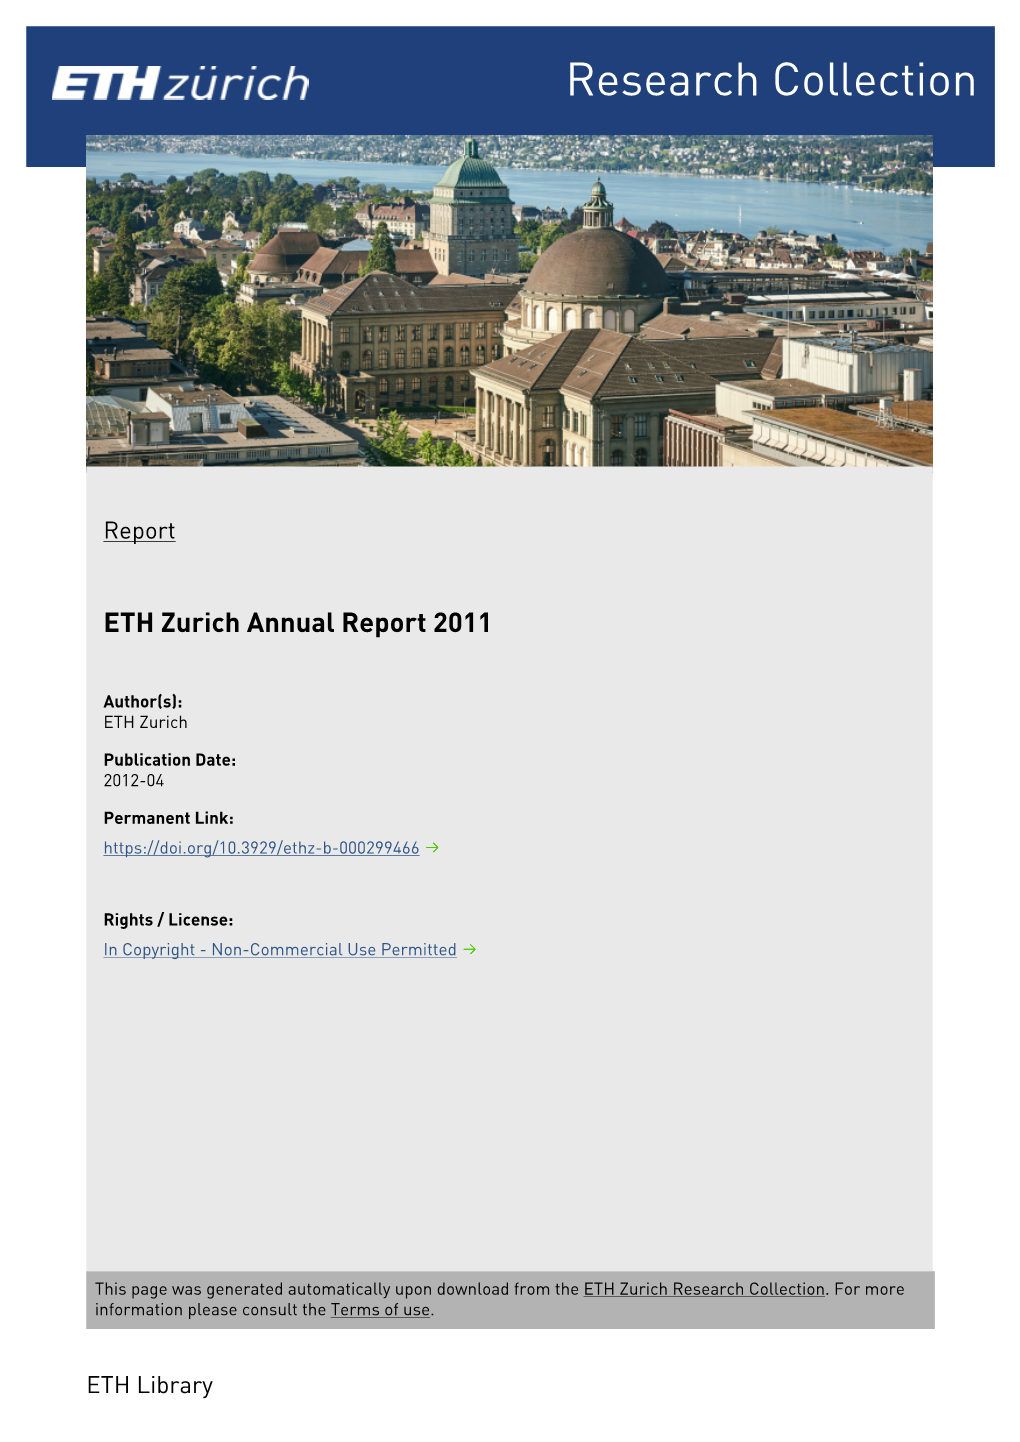 ETH Zurich Annual Report 2011